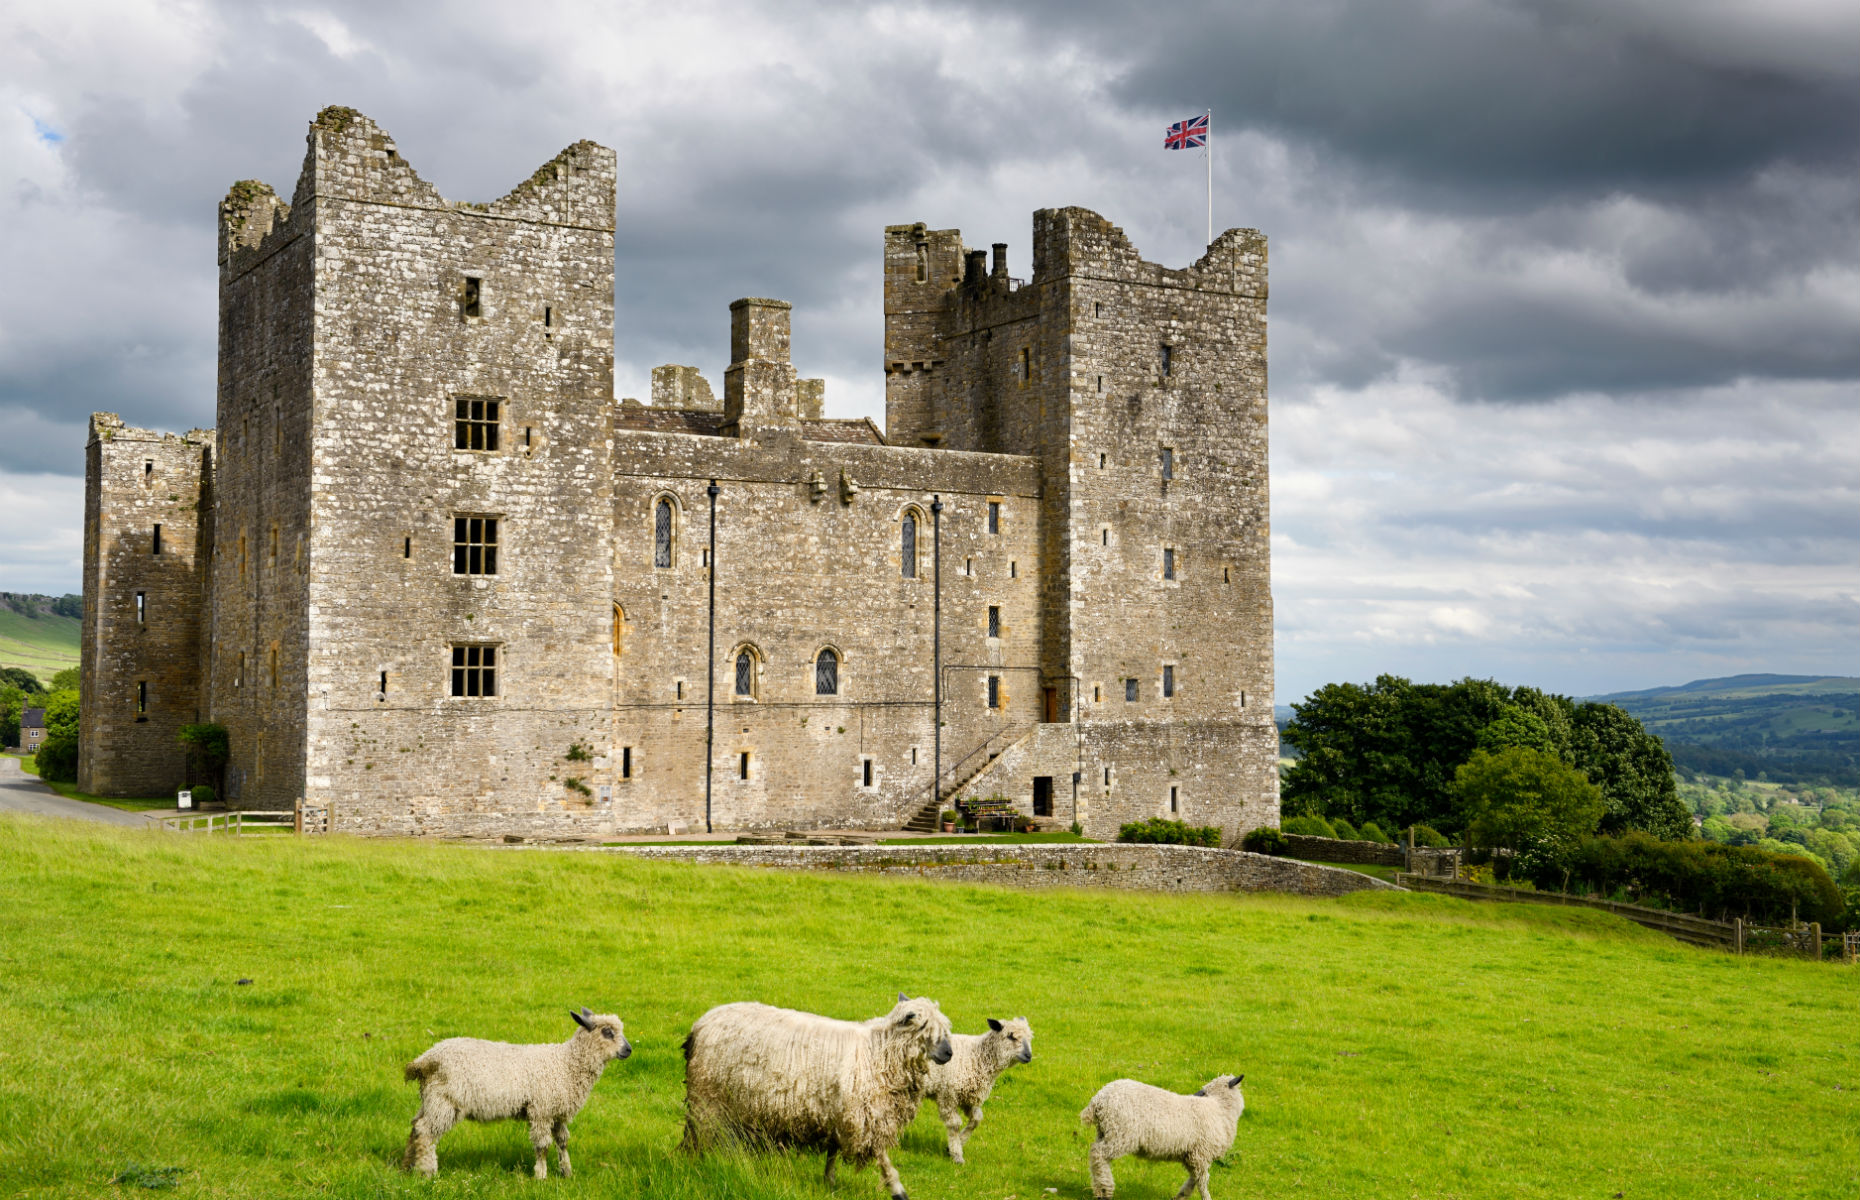 Bolton Castle (Image: Reimar/Shutterstock)